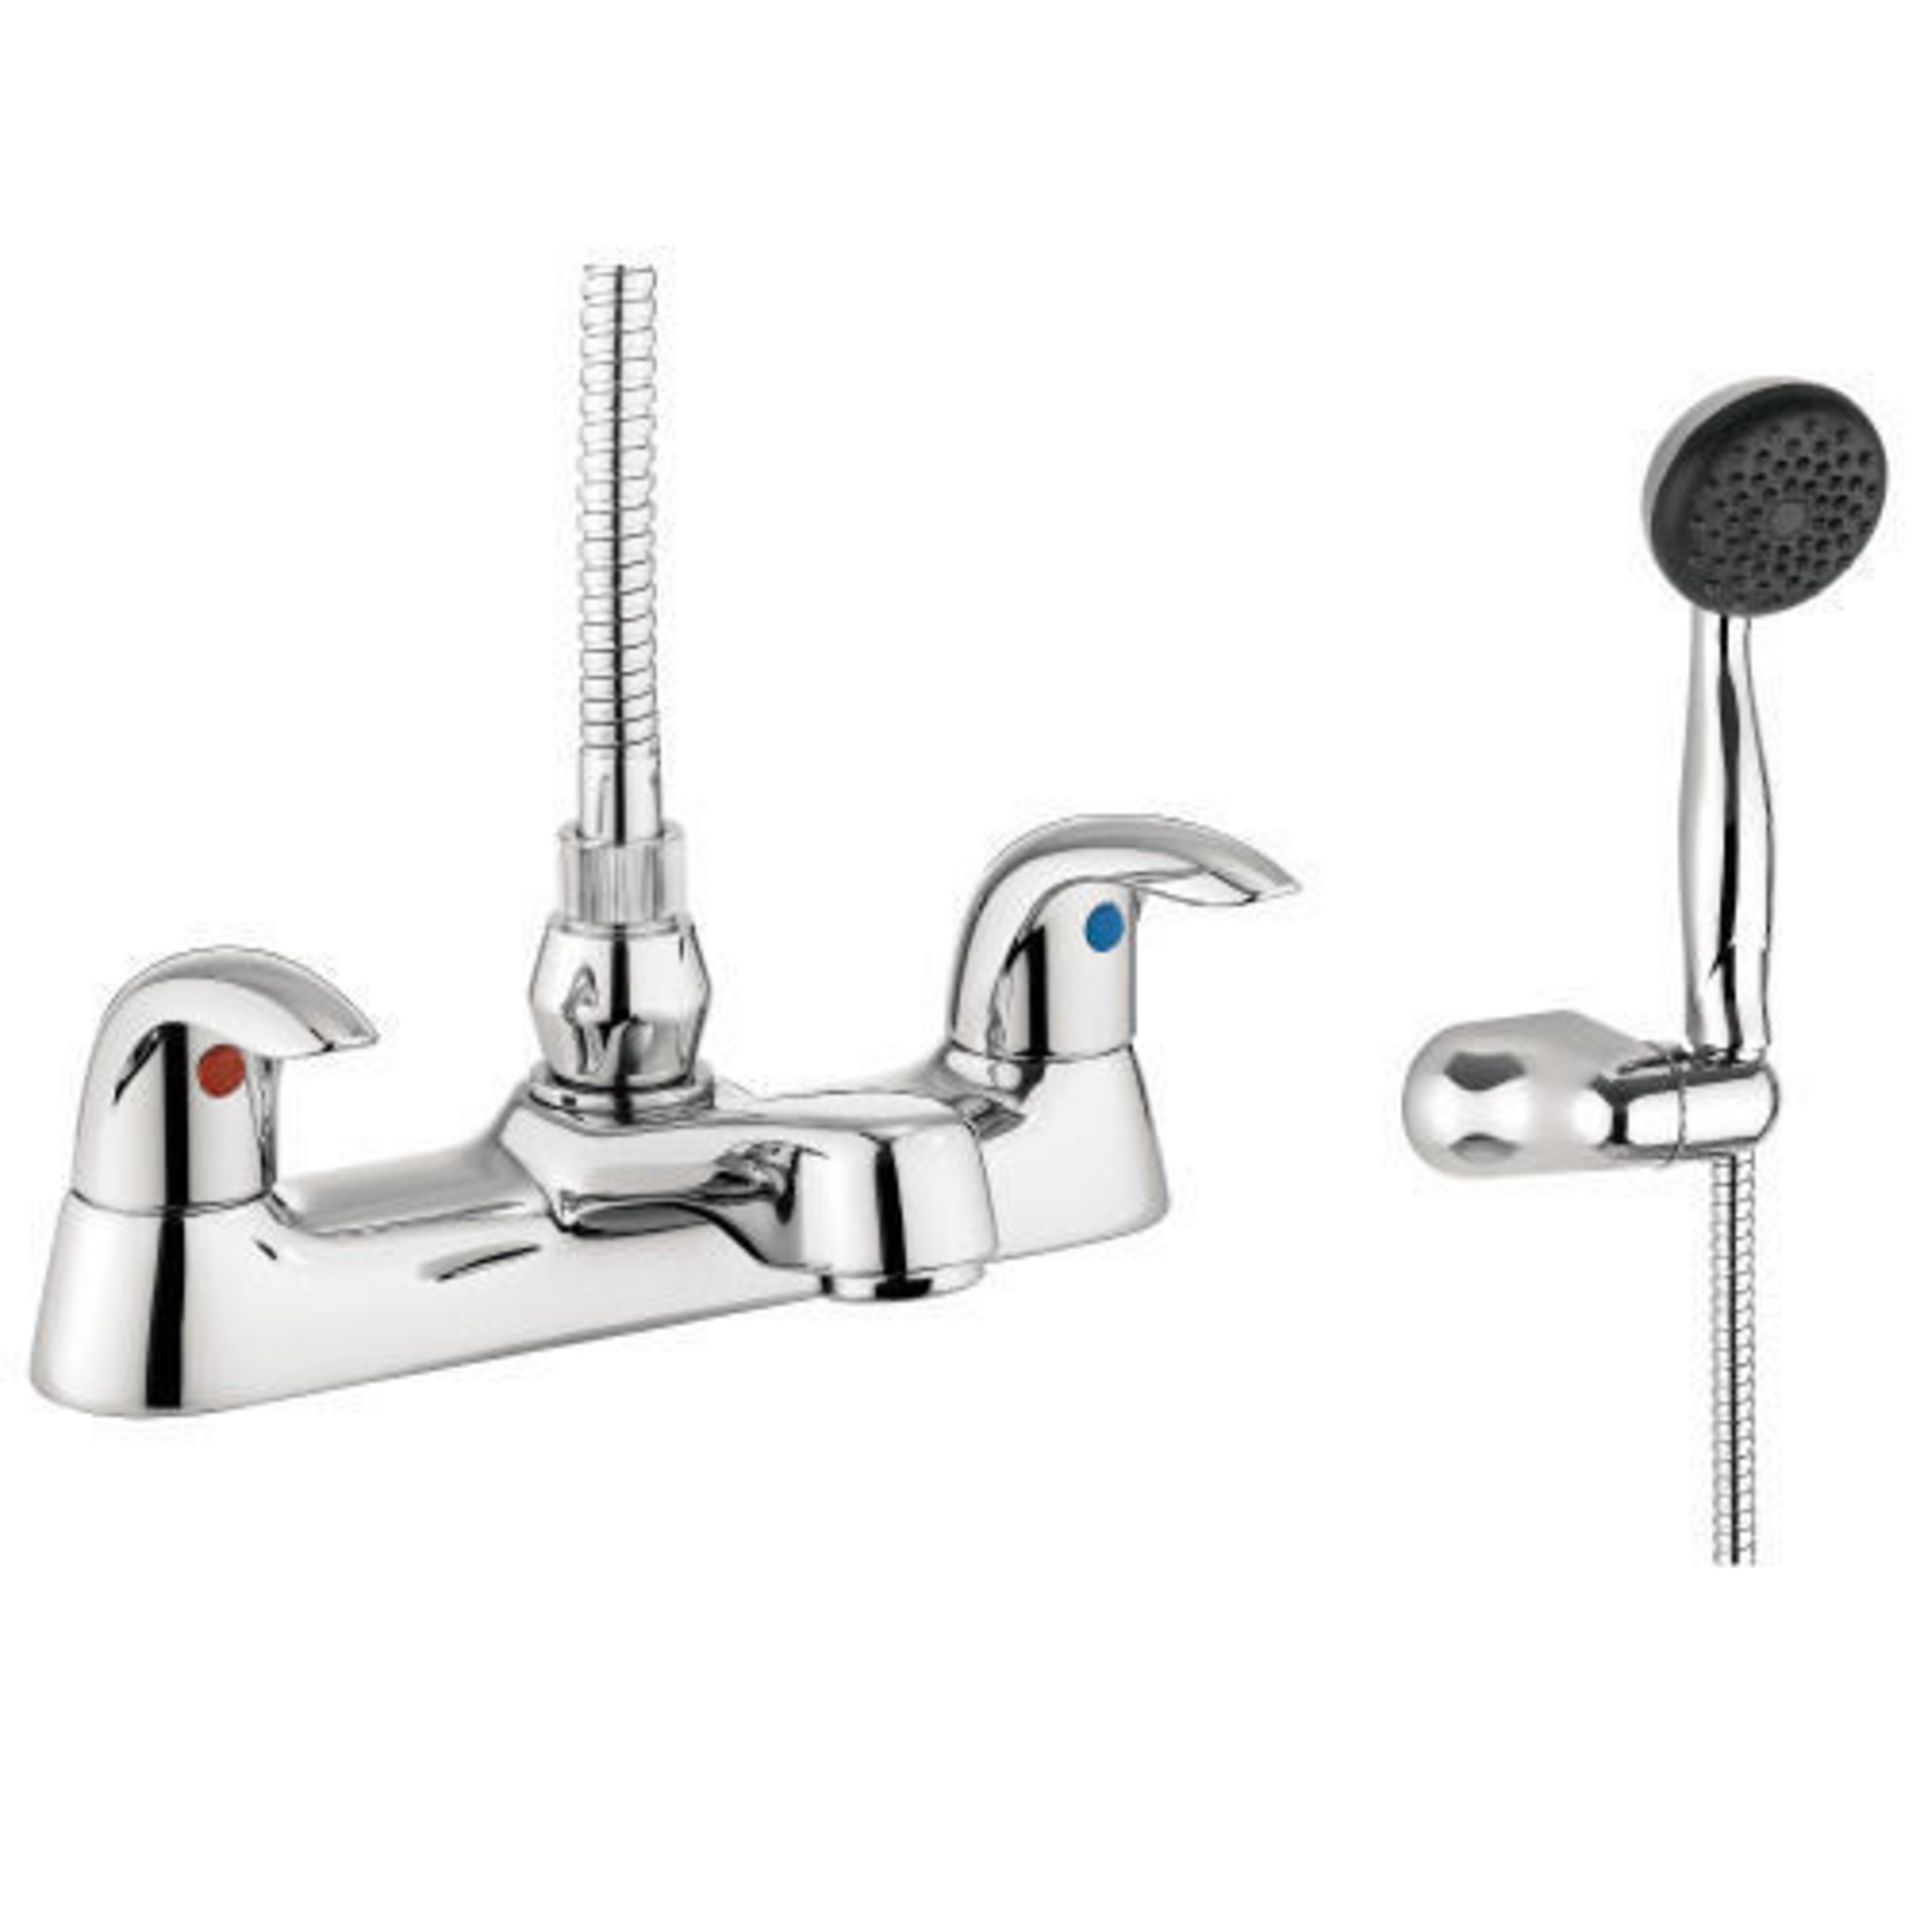 Deck mounted modern bath shower mixer tap - Image 2 of 2